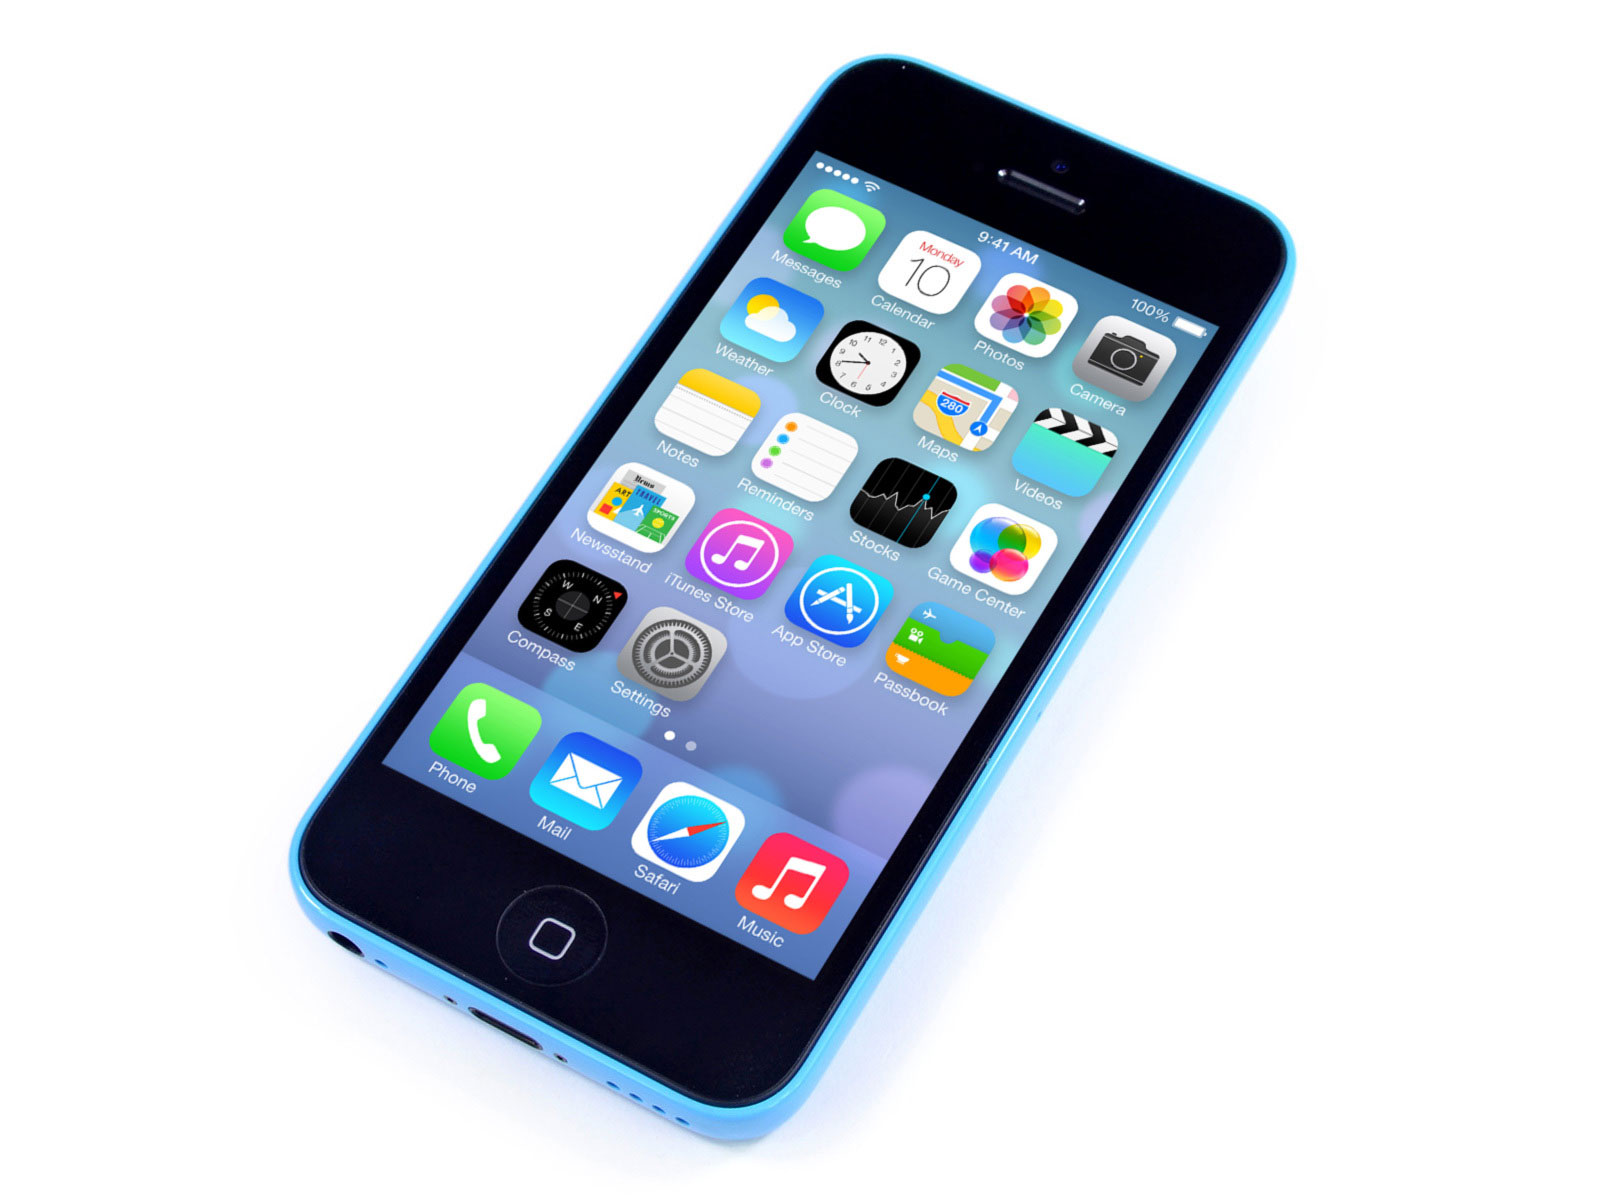 Apple iPhone 5C 16GB Verizon Wireless 4G LTE Smartphone | eBay